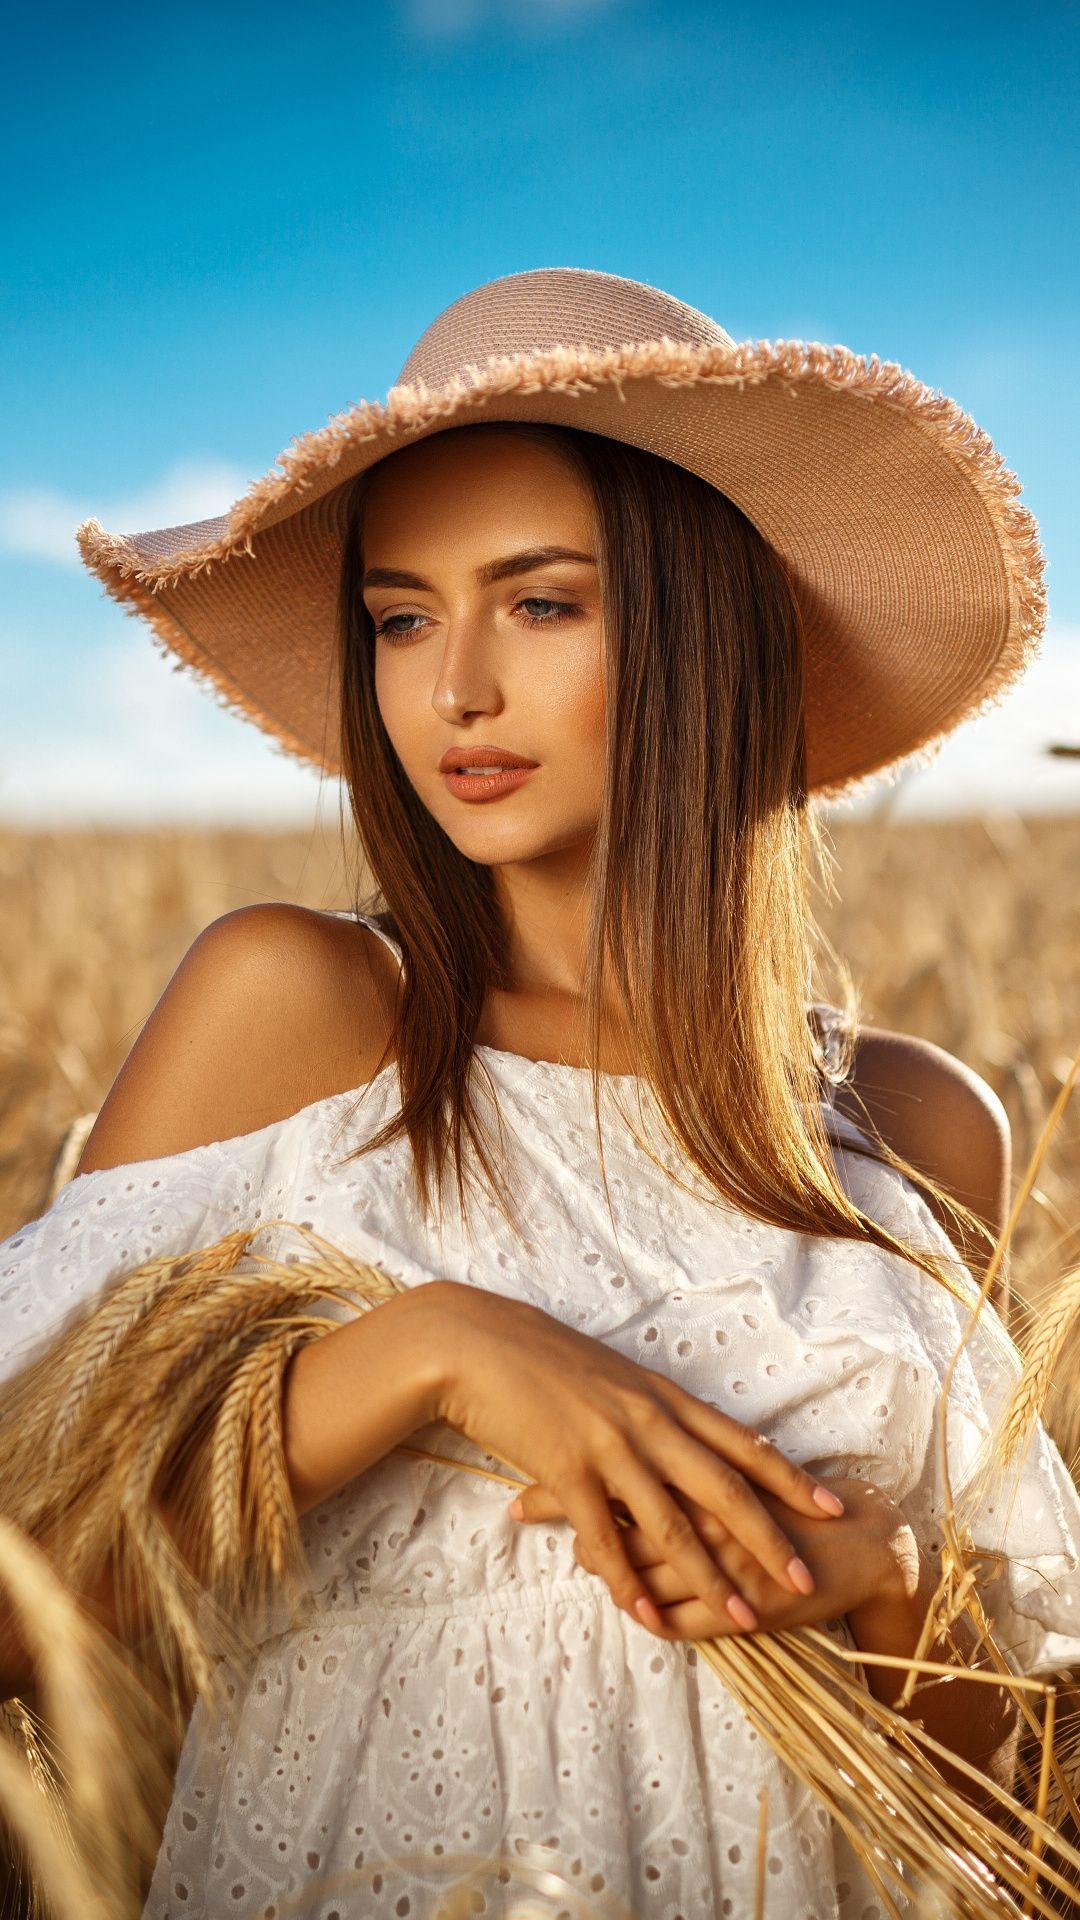 Beautiful, woman, straw hat, outdoor .com